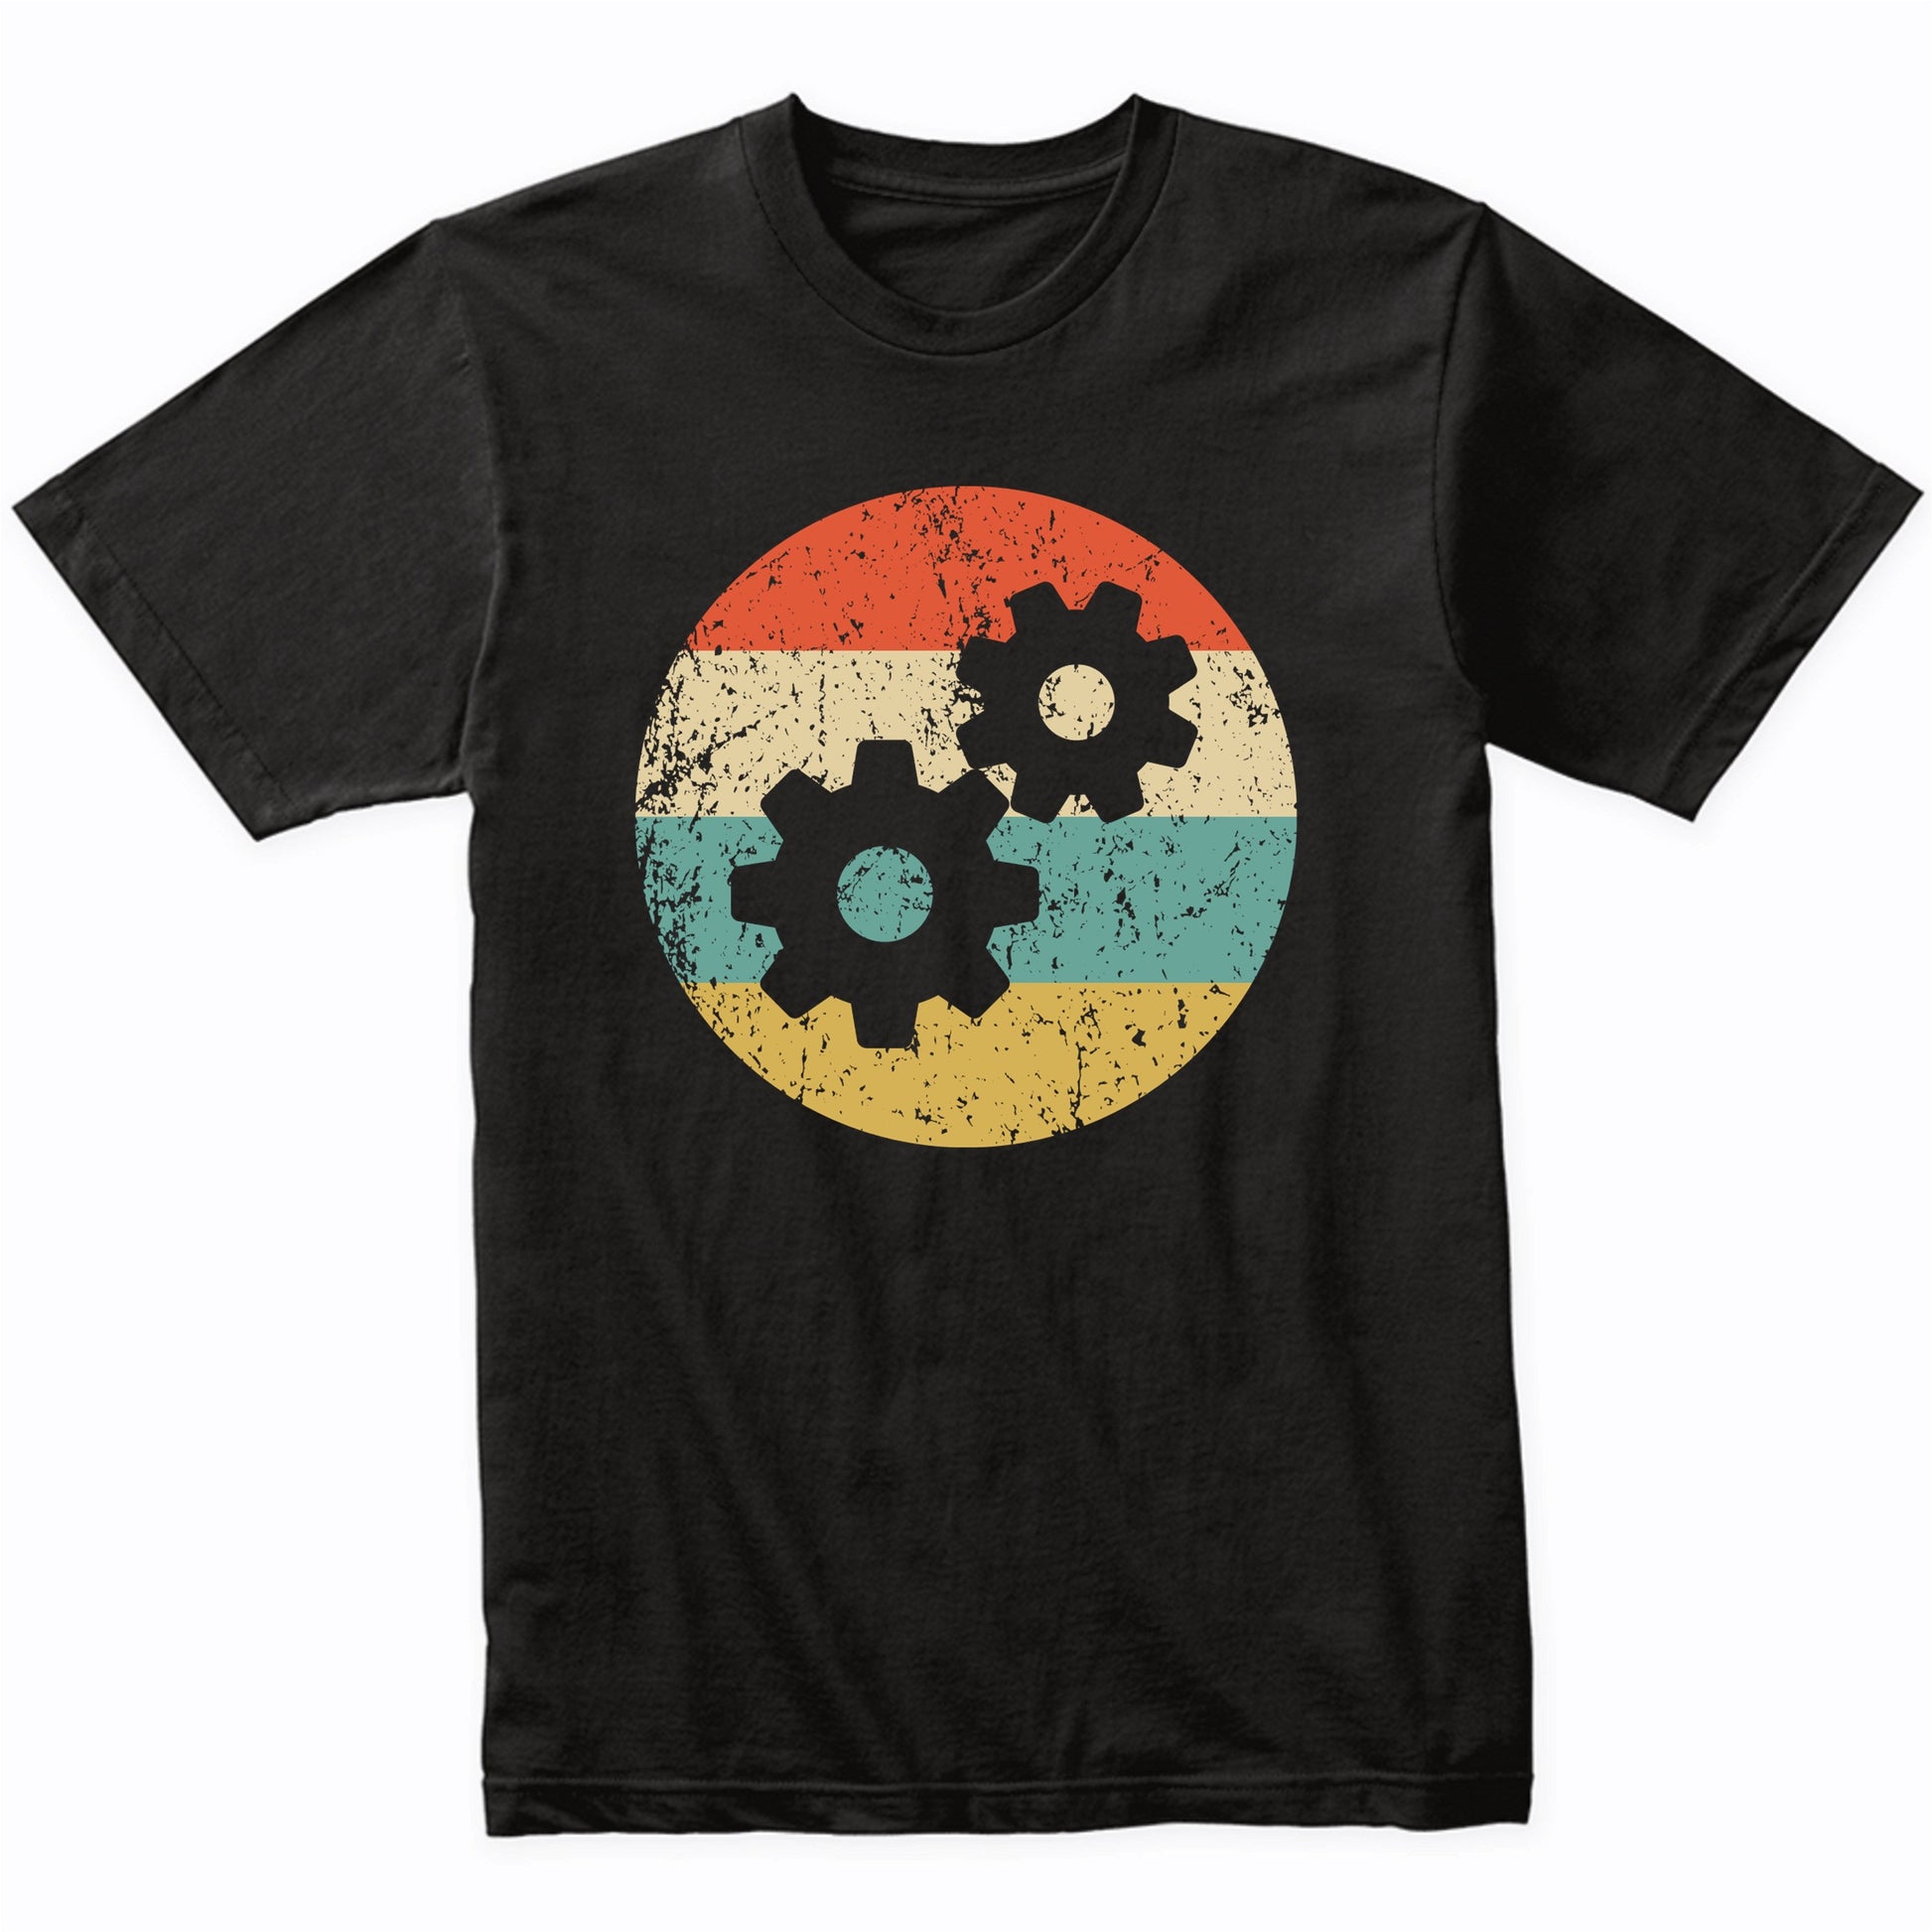 Engineer Shirt - Vintage Retro Gears T-Shirt